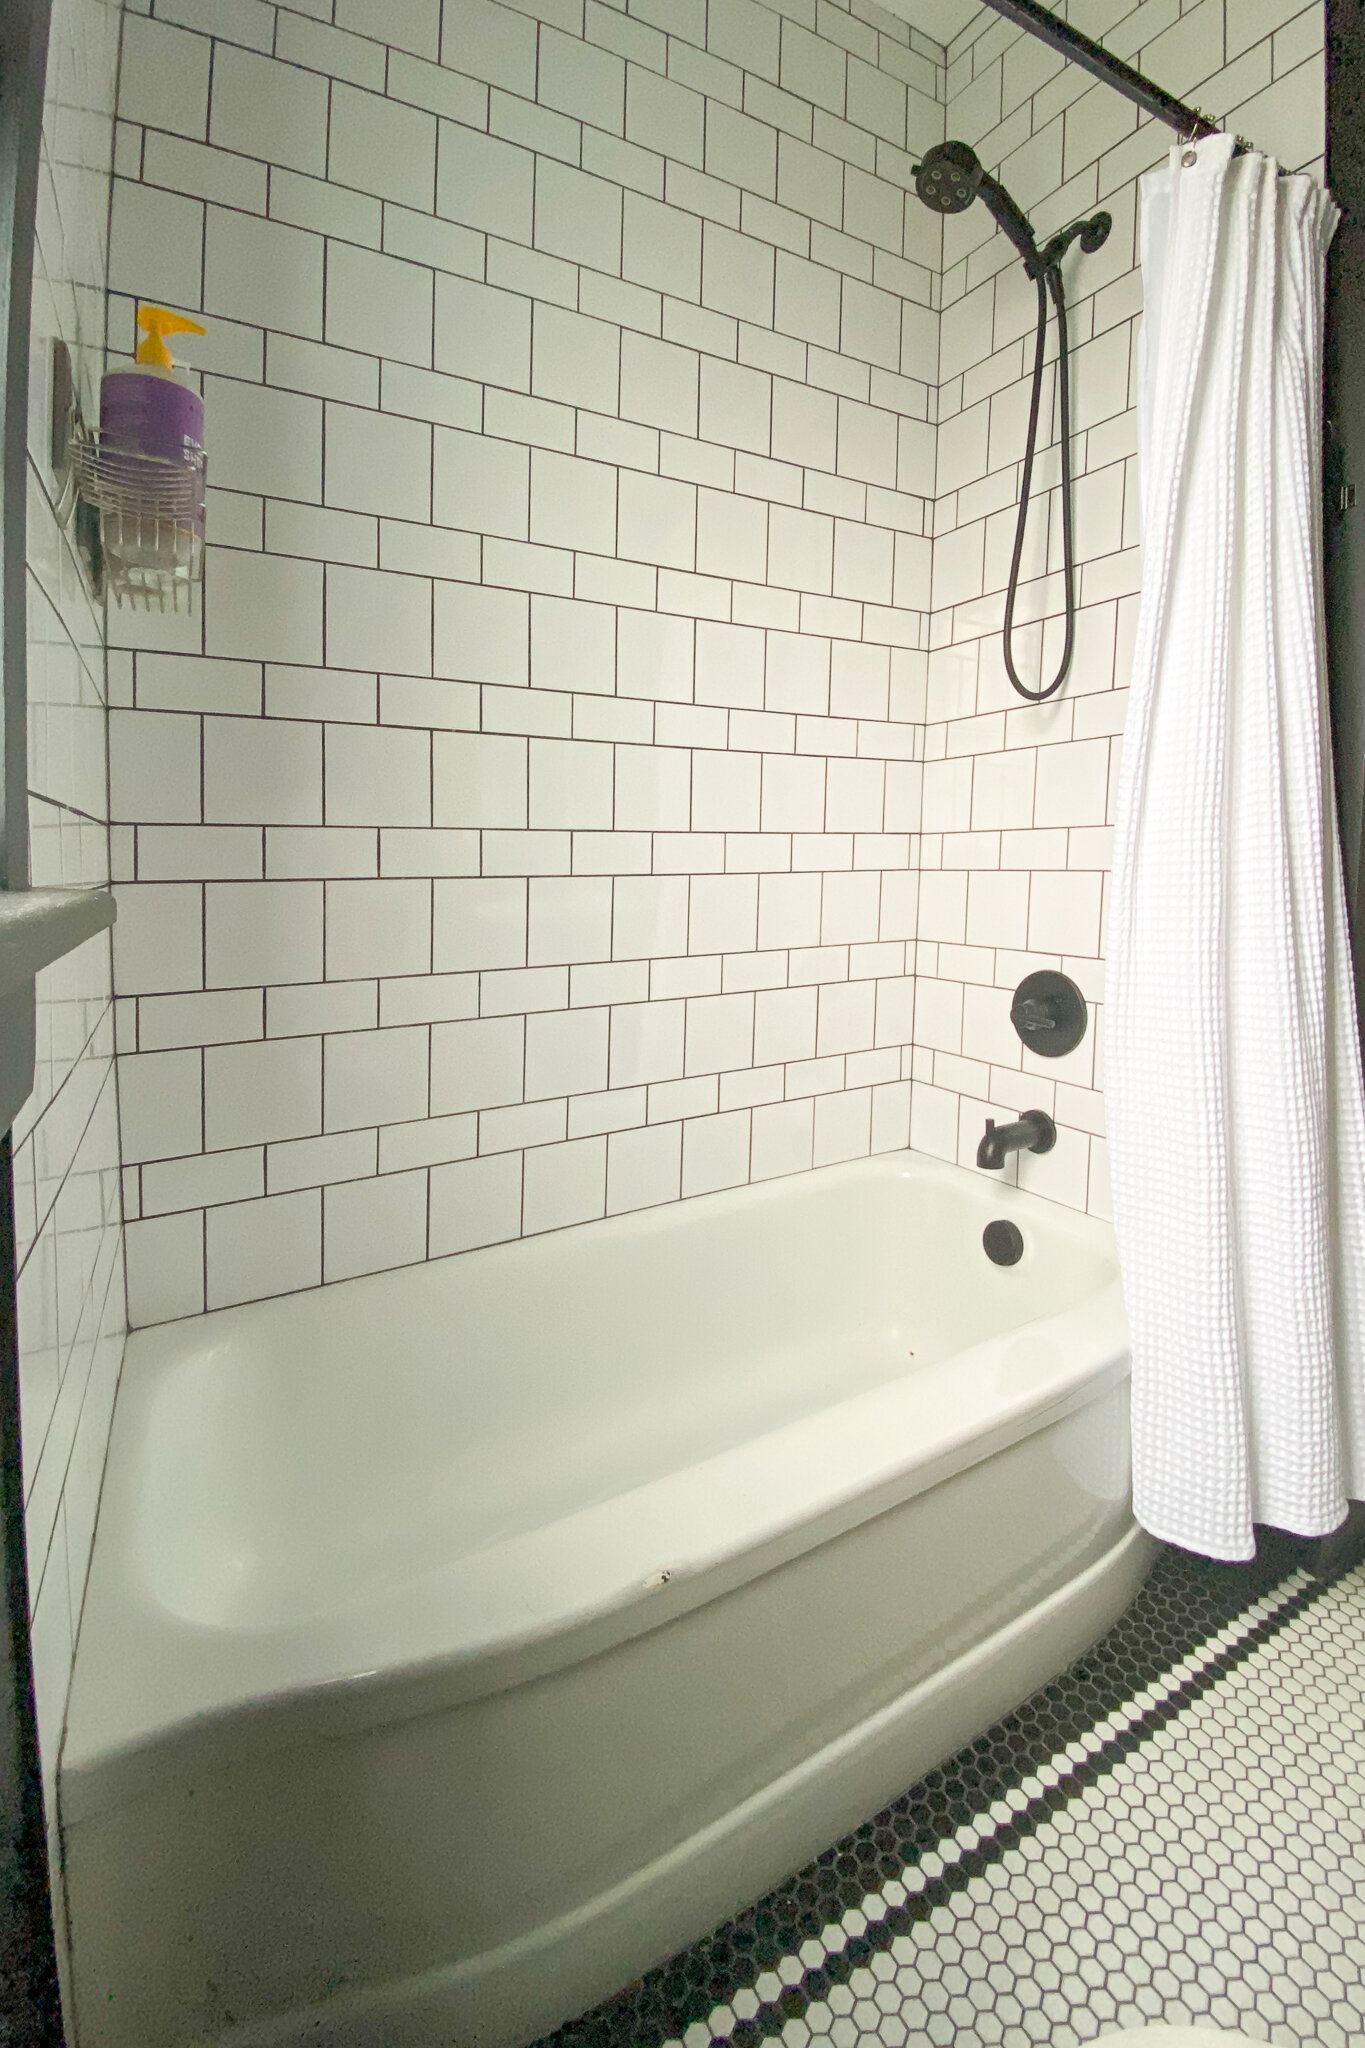 Historic Bathroom Tile Designs Orc, Bathroom Tile Designs Around Bathtub